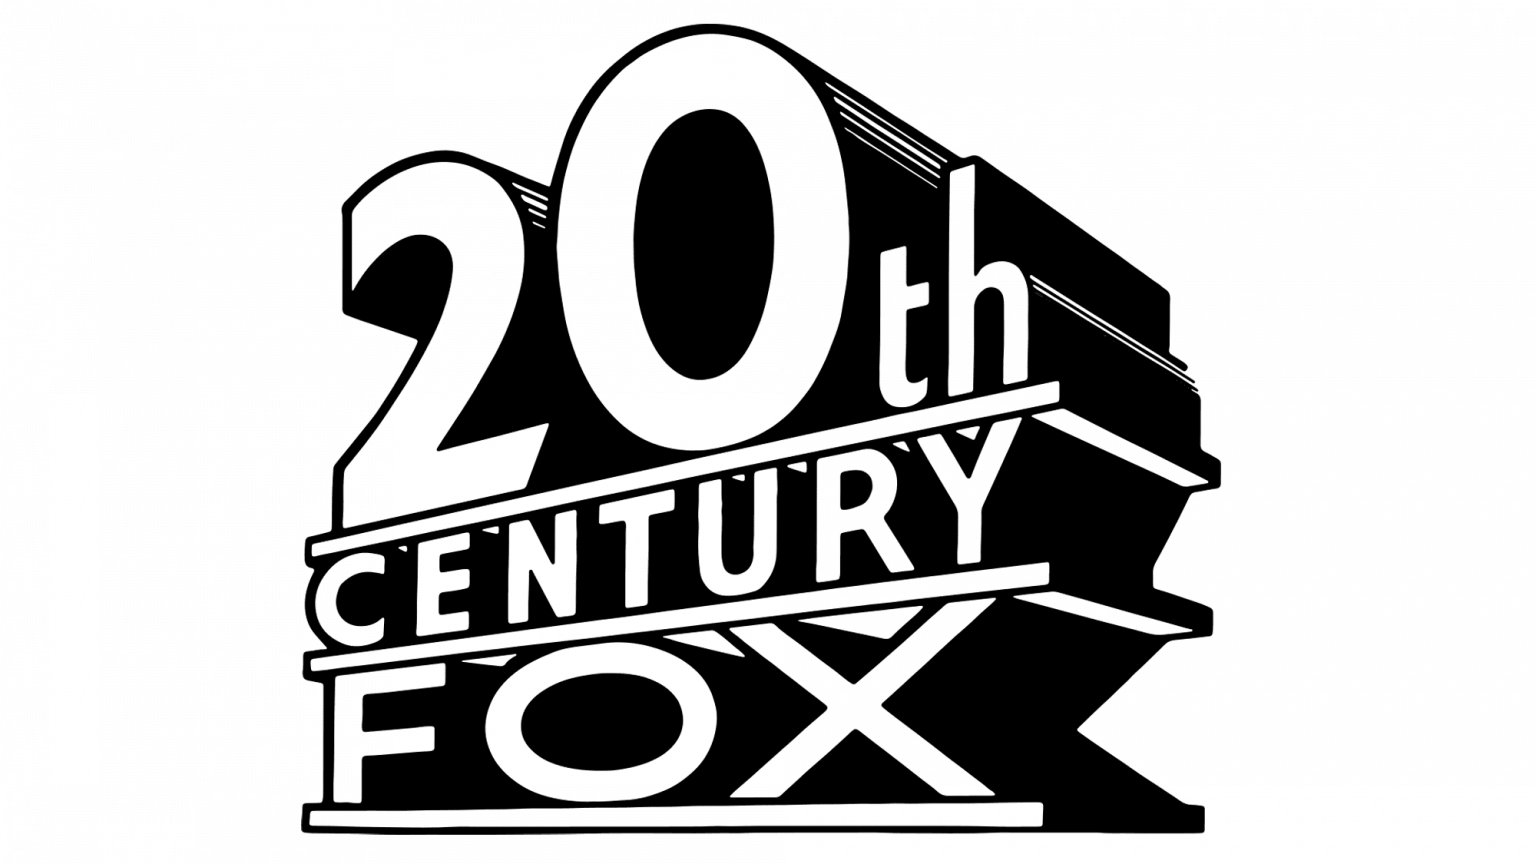 20 Century Fox logo. 20 Век Фокс 1935. 20th Century Fox 1. 20th Century Fox logo 1935. Заставка fox